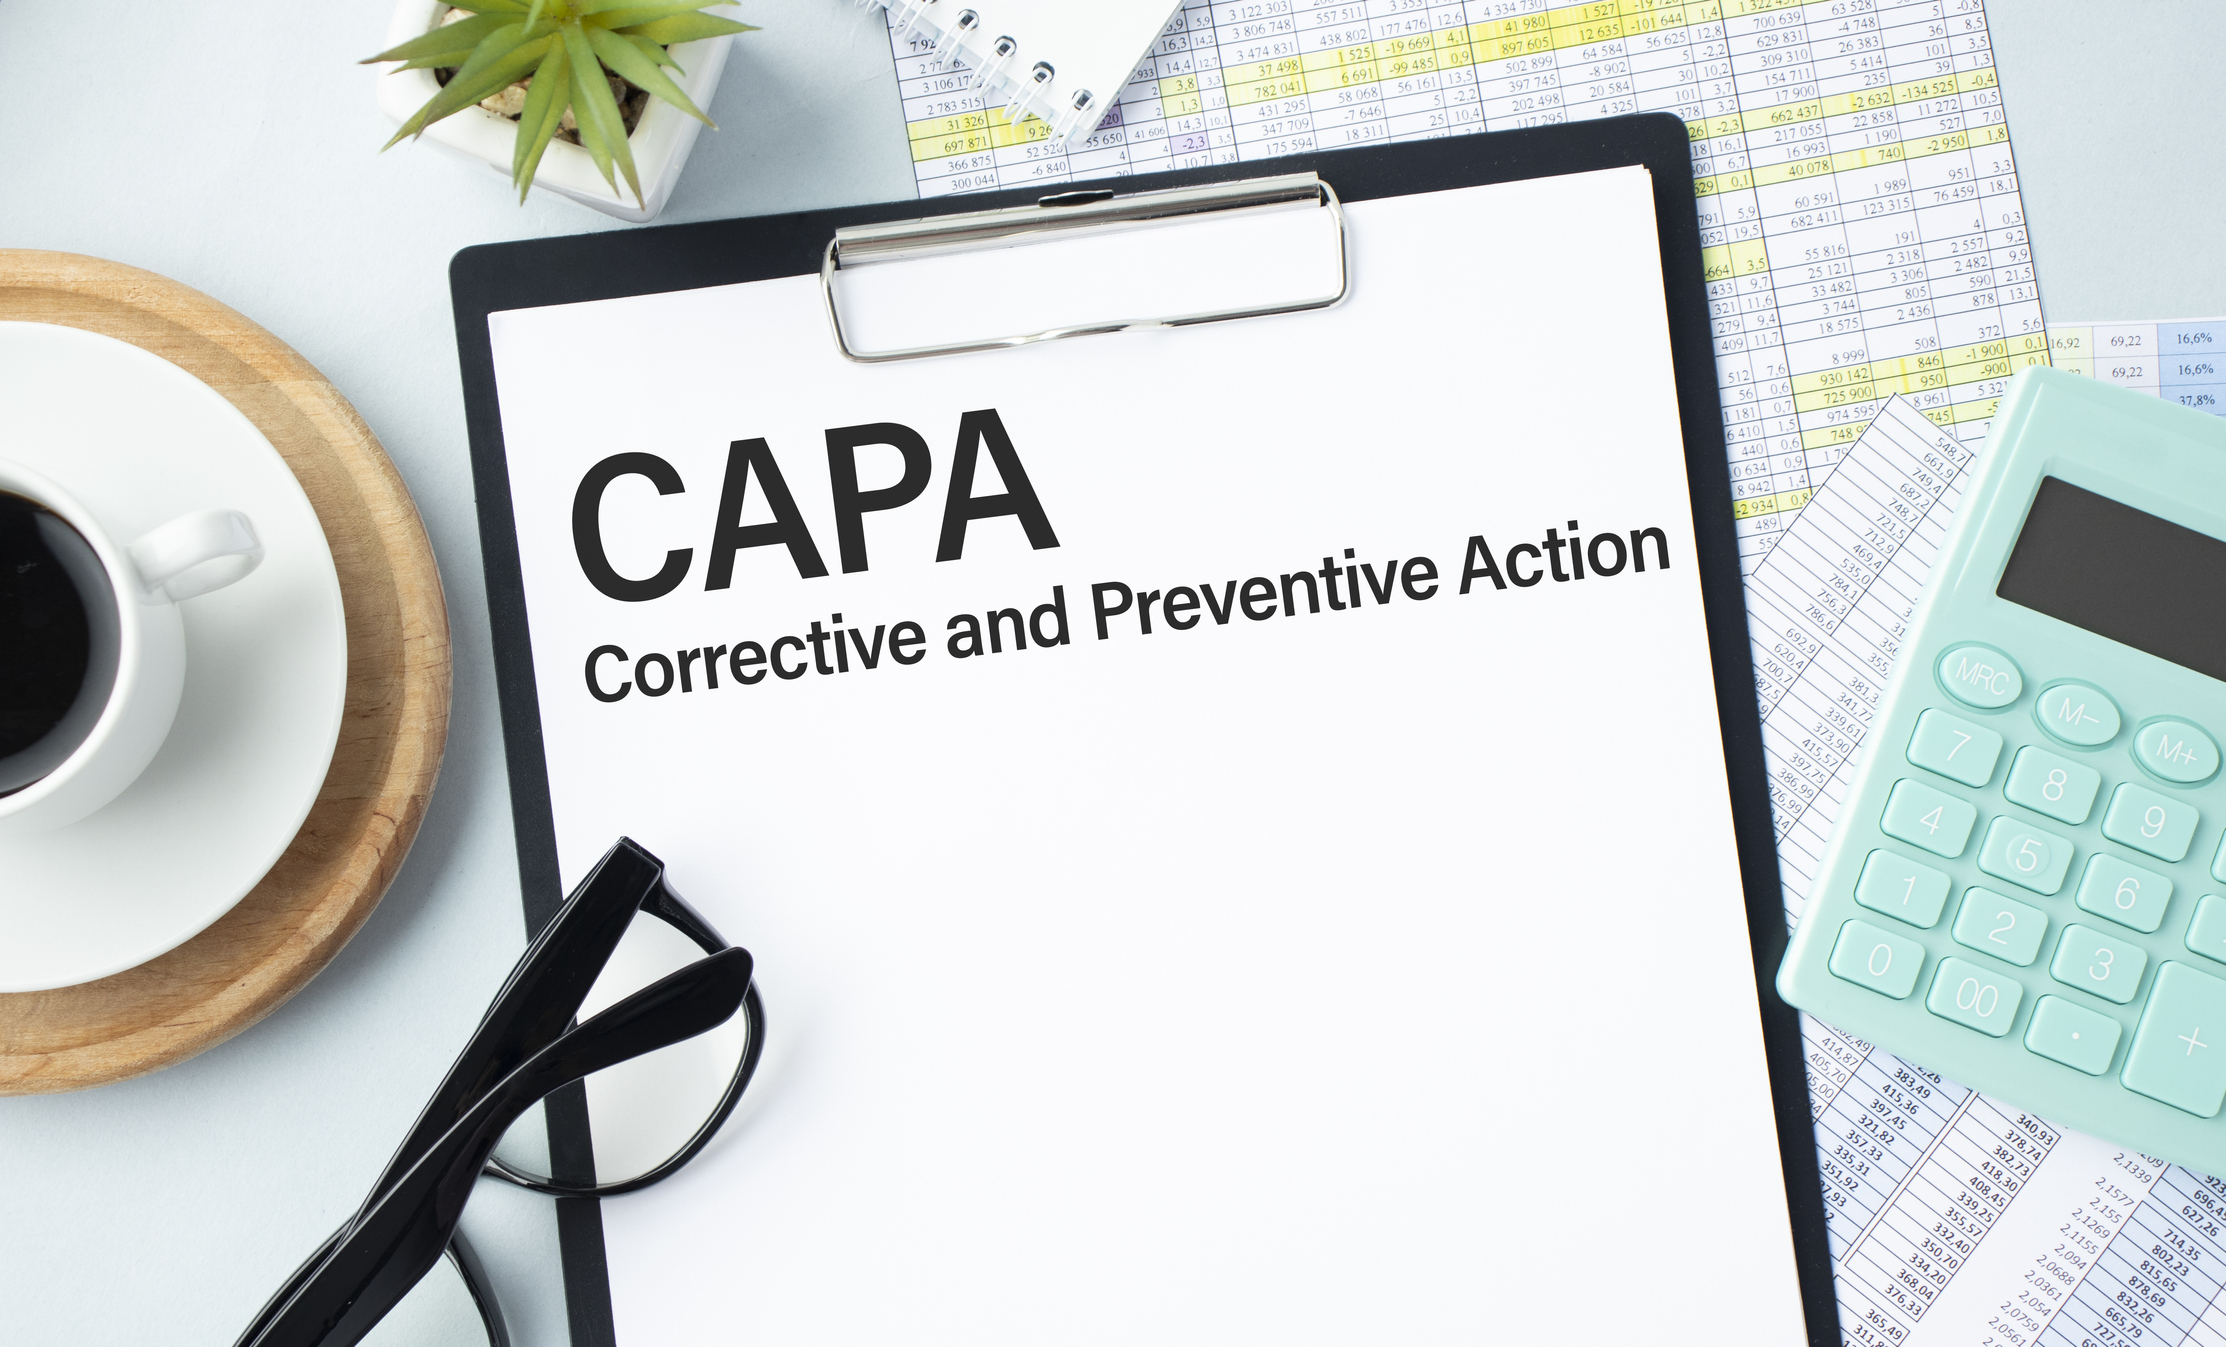 CAPA corrective and preventive action